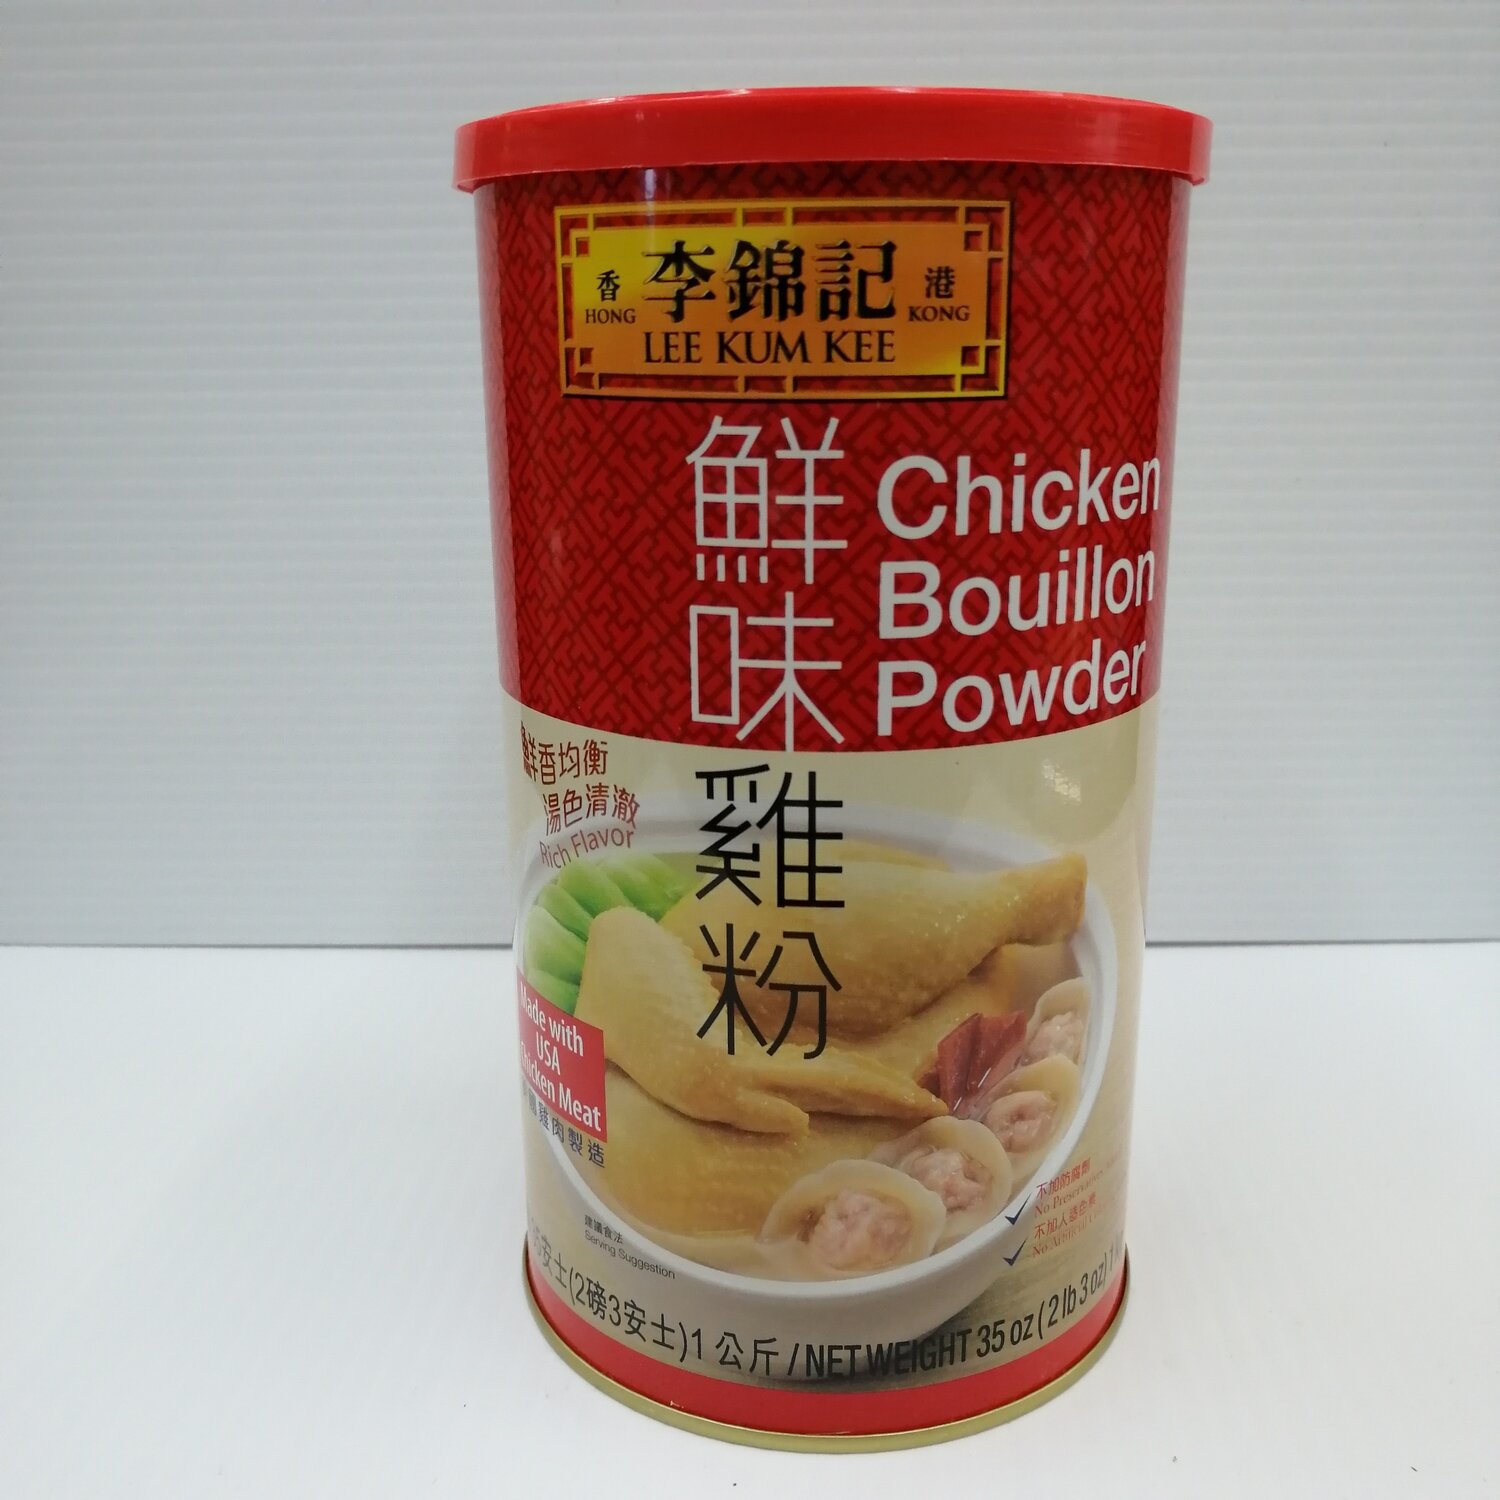 GROC【杂货】李锦记 鲜味鸡粉 35oz(1kg)